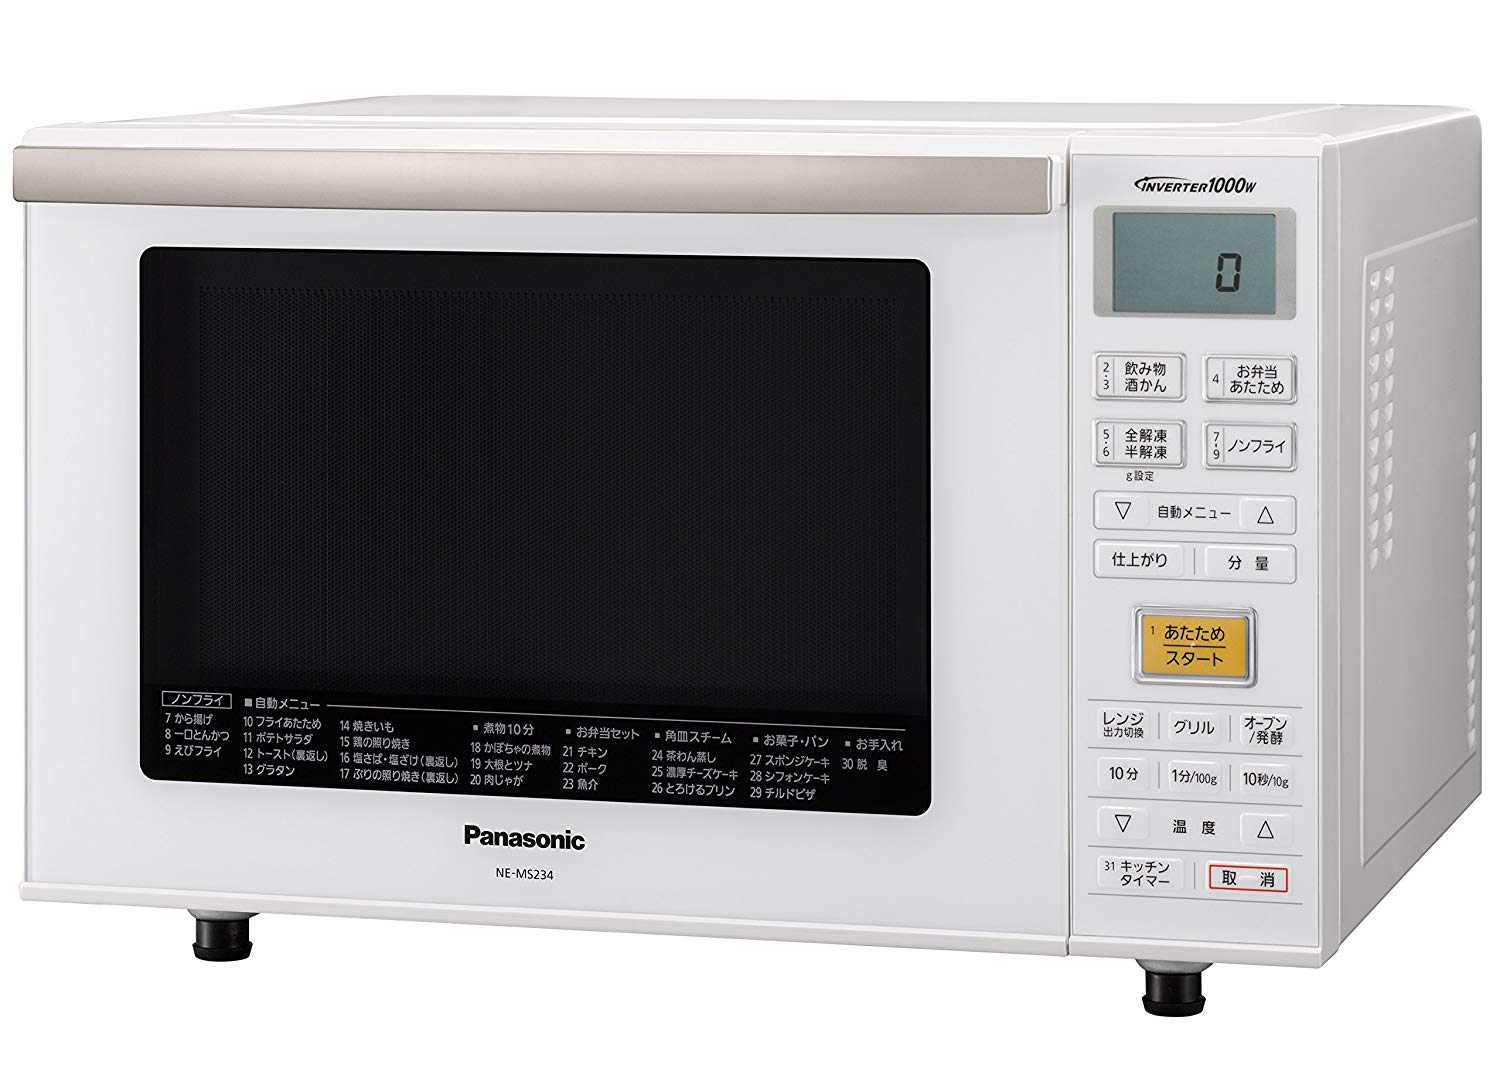 Panasonic Microwave Oven erekku 23l White Ne – MS234 – W